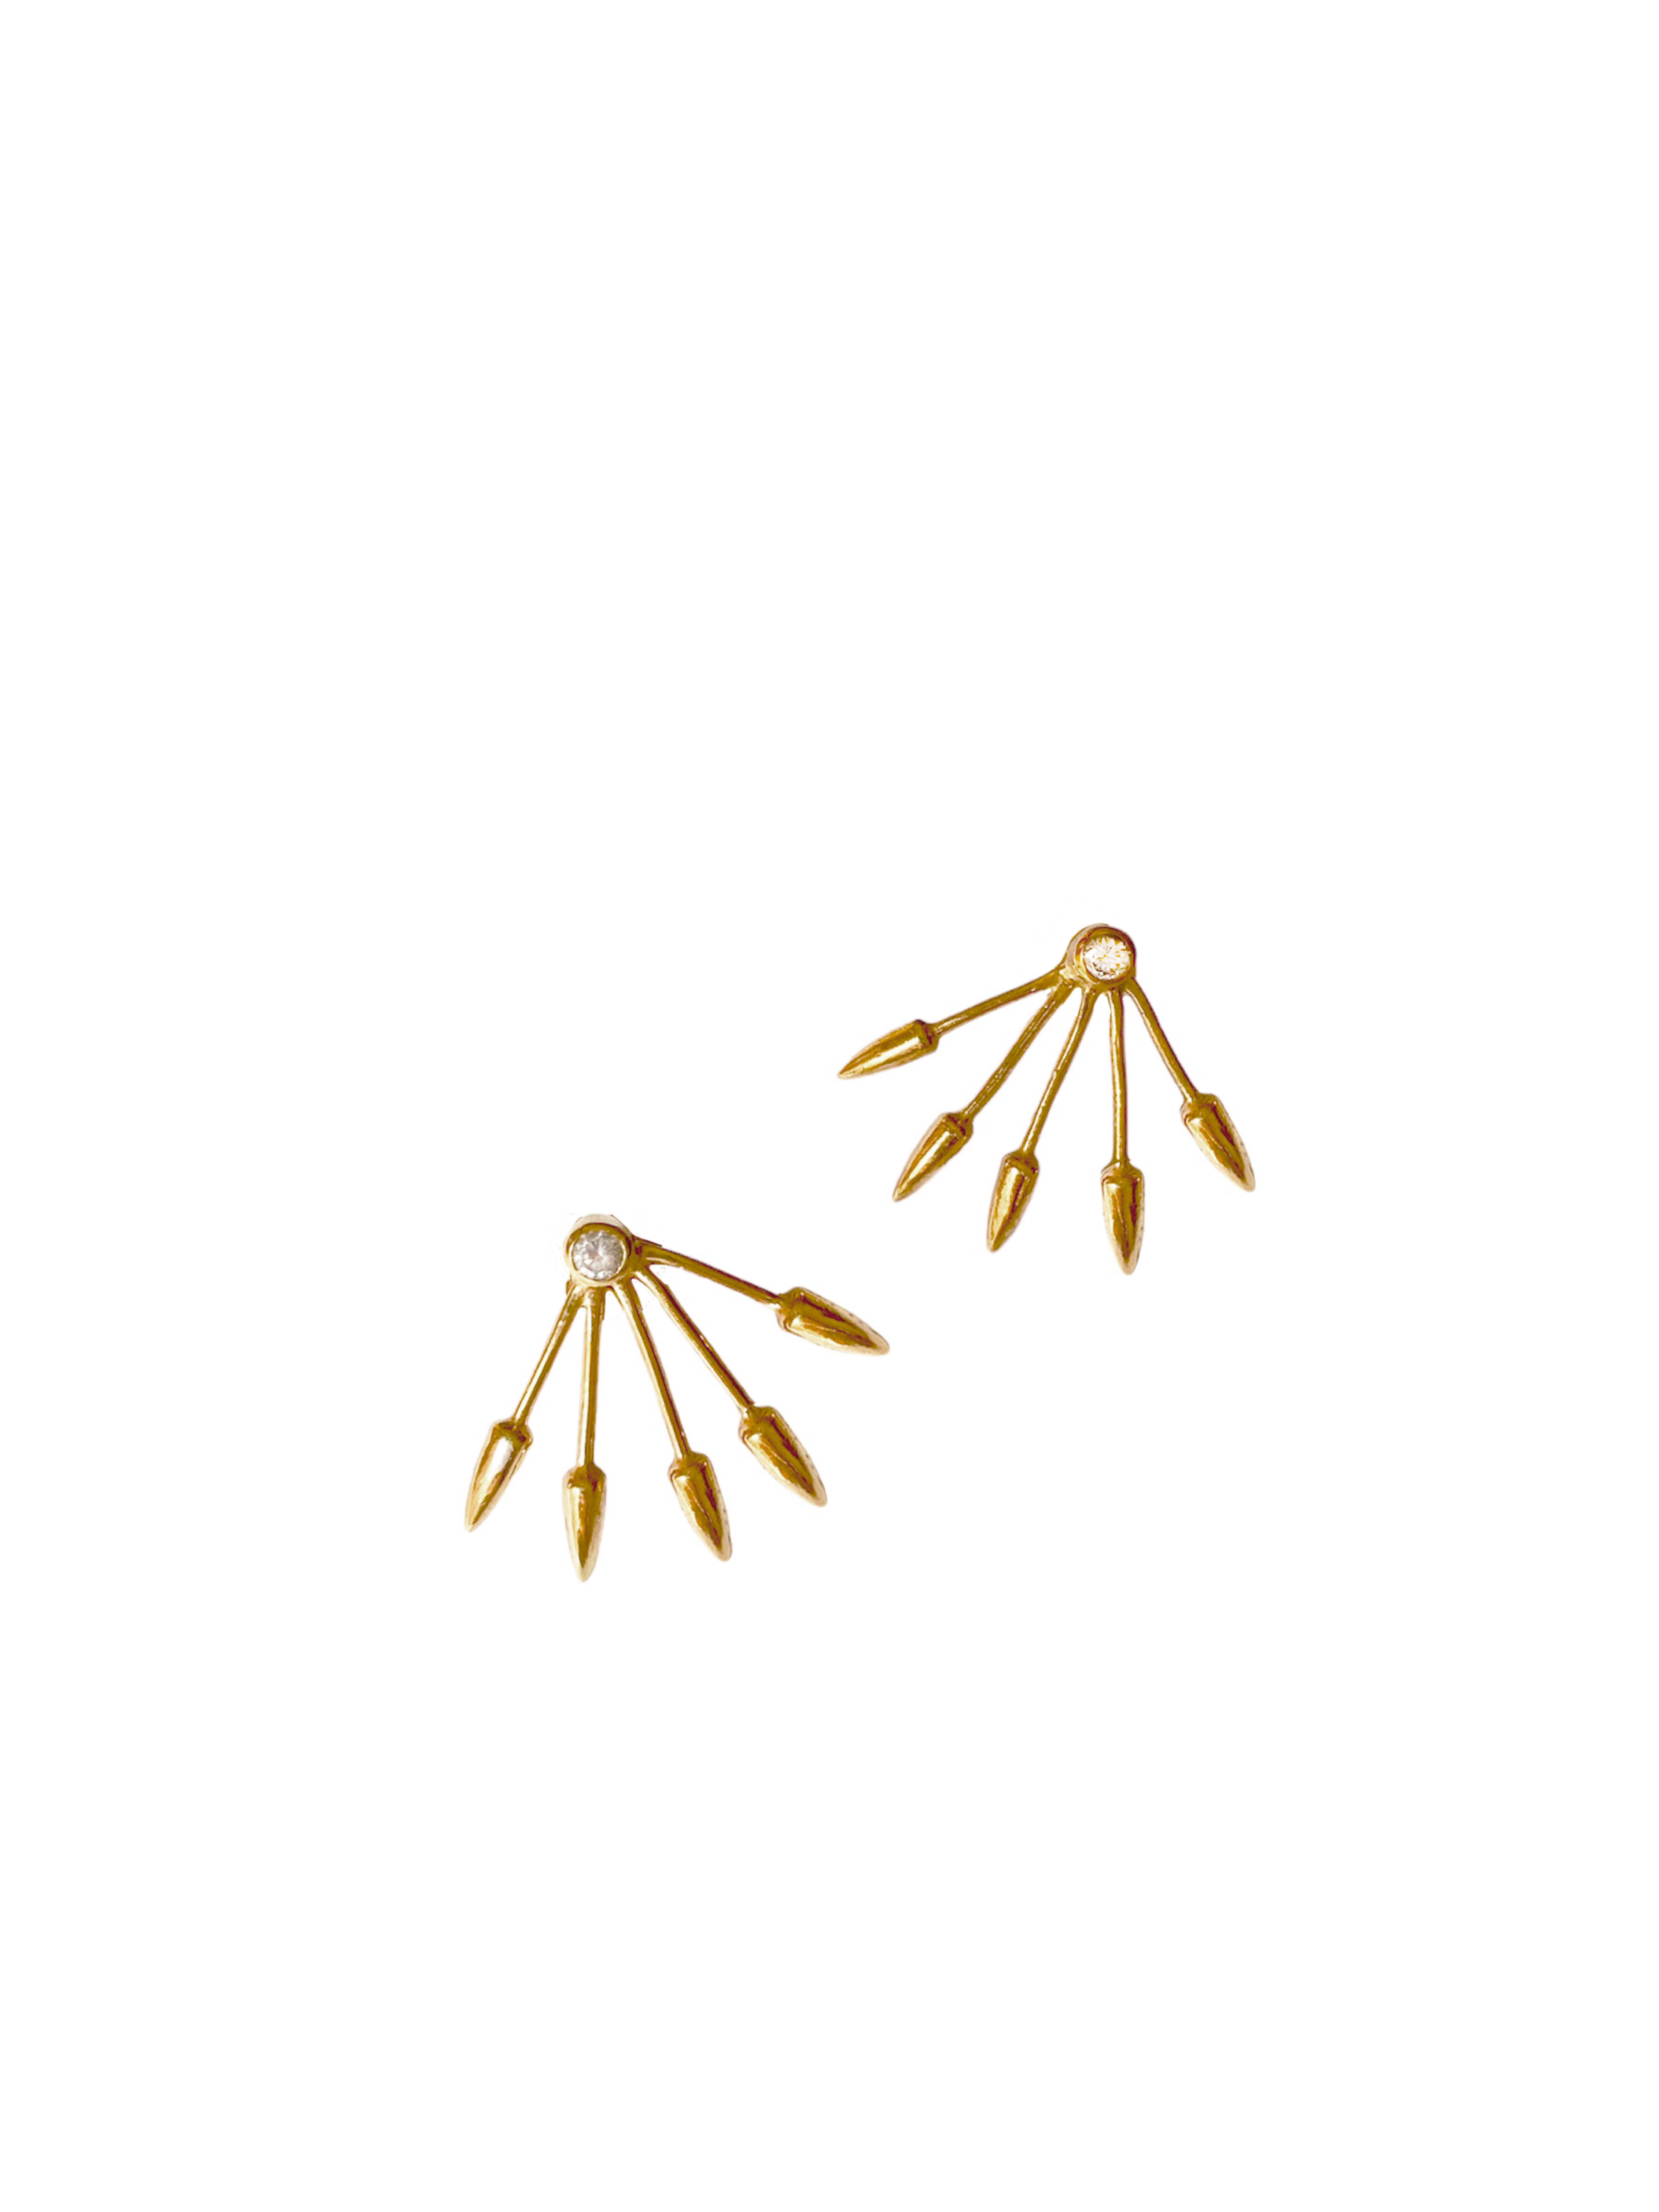 Brilliant Cut Rossella Ugolini Sunburst Earrings 18K Yellow Gold and Zircon For Sale